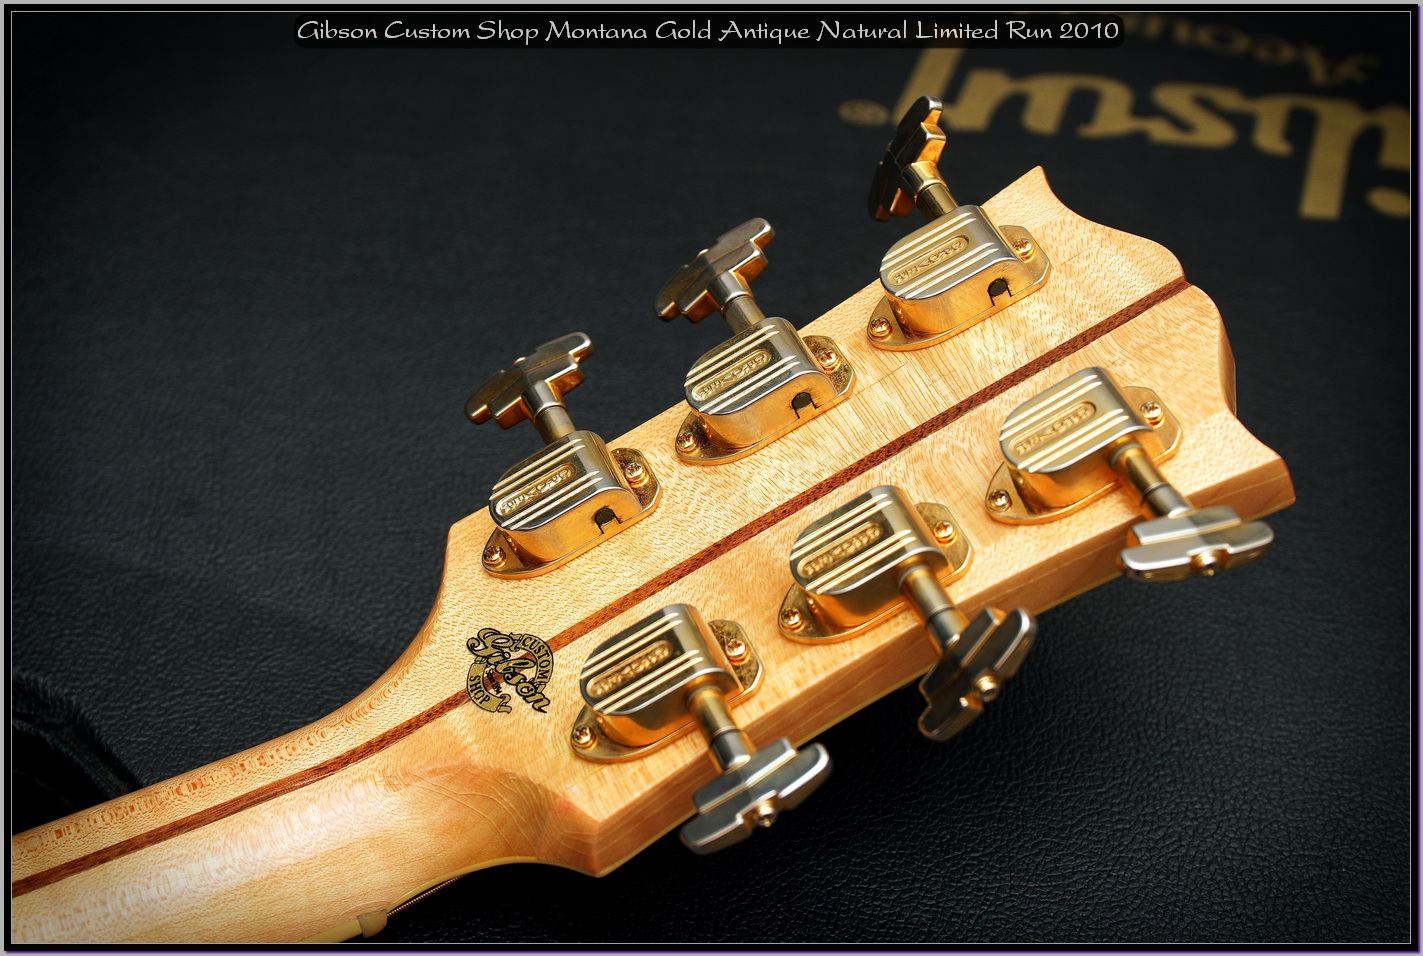 Gibson Custom Shop Montana Gold Antique Natural Limited Run 2010 05_x1400.jpg